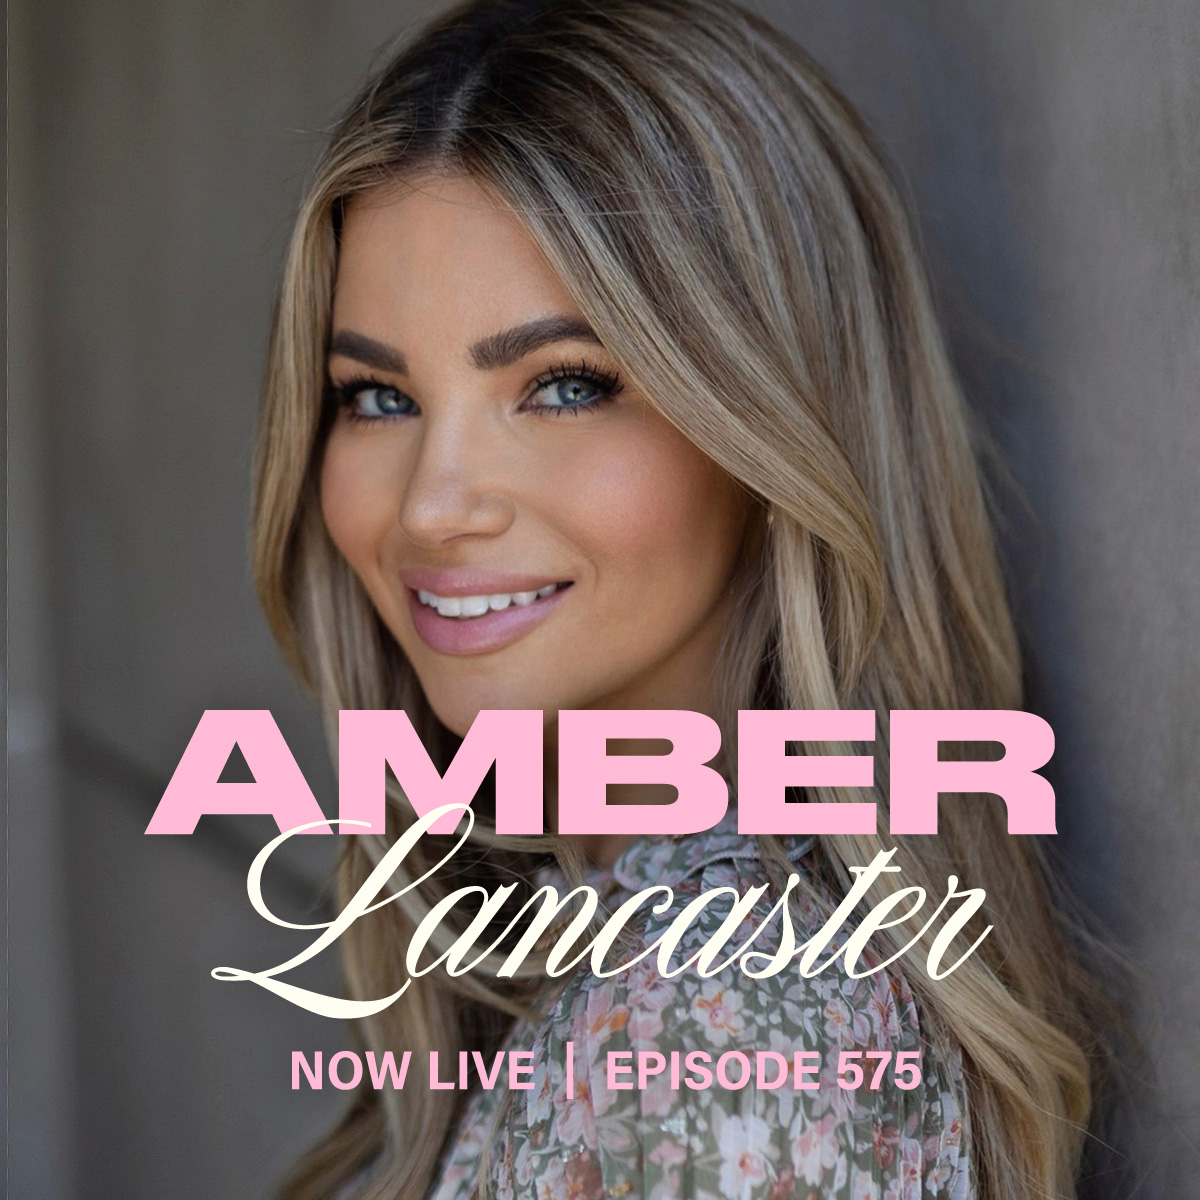 Amber Lancaster